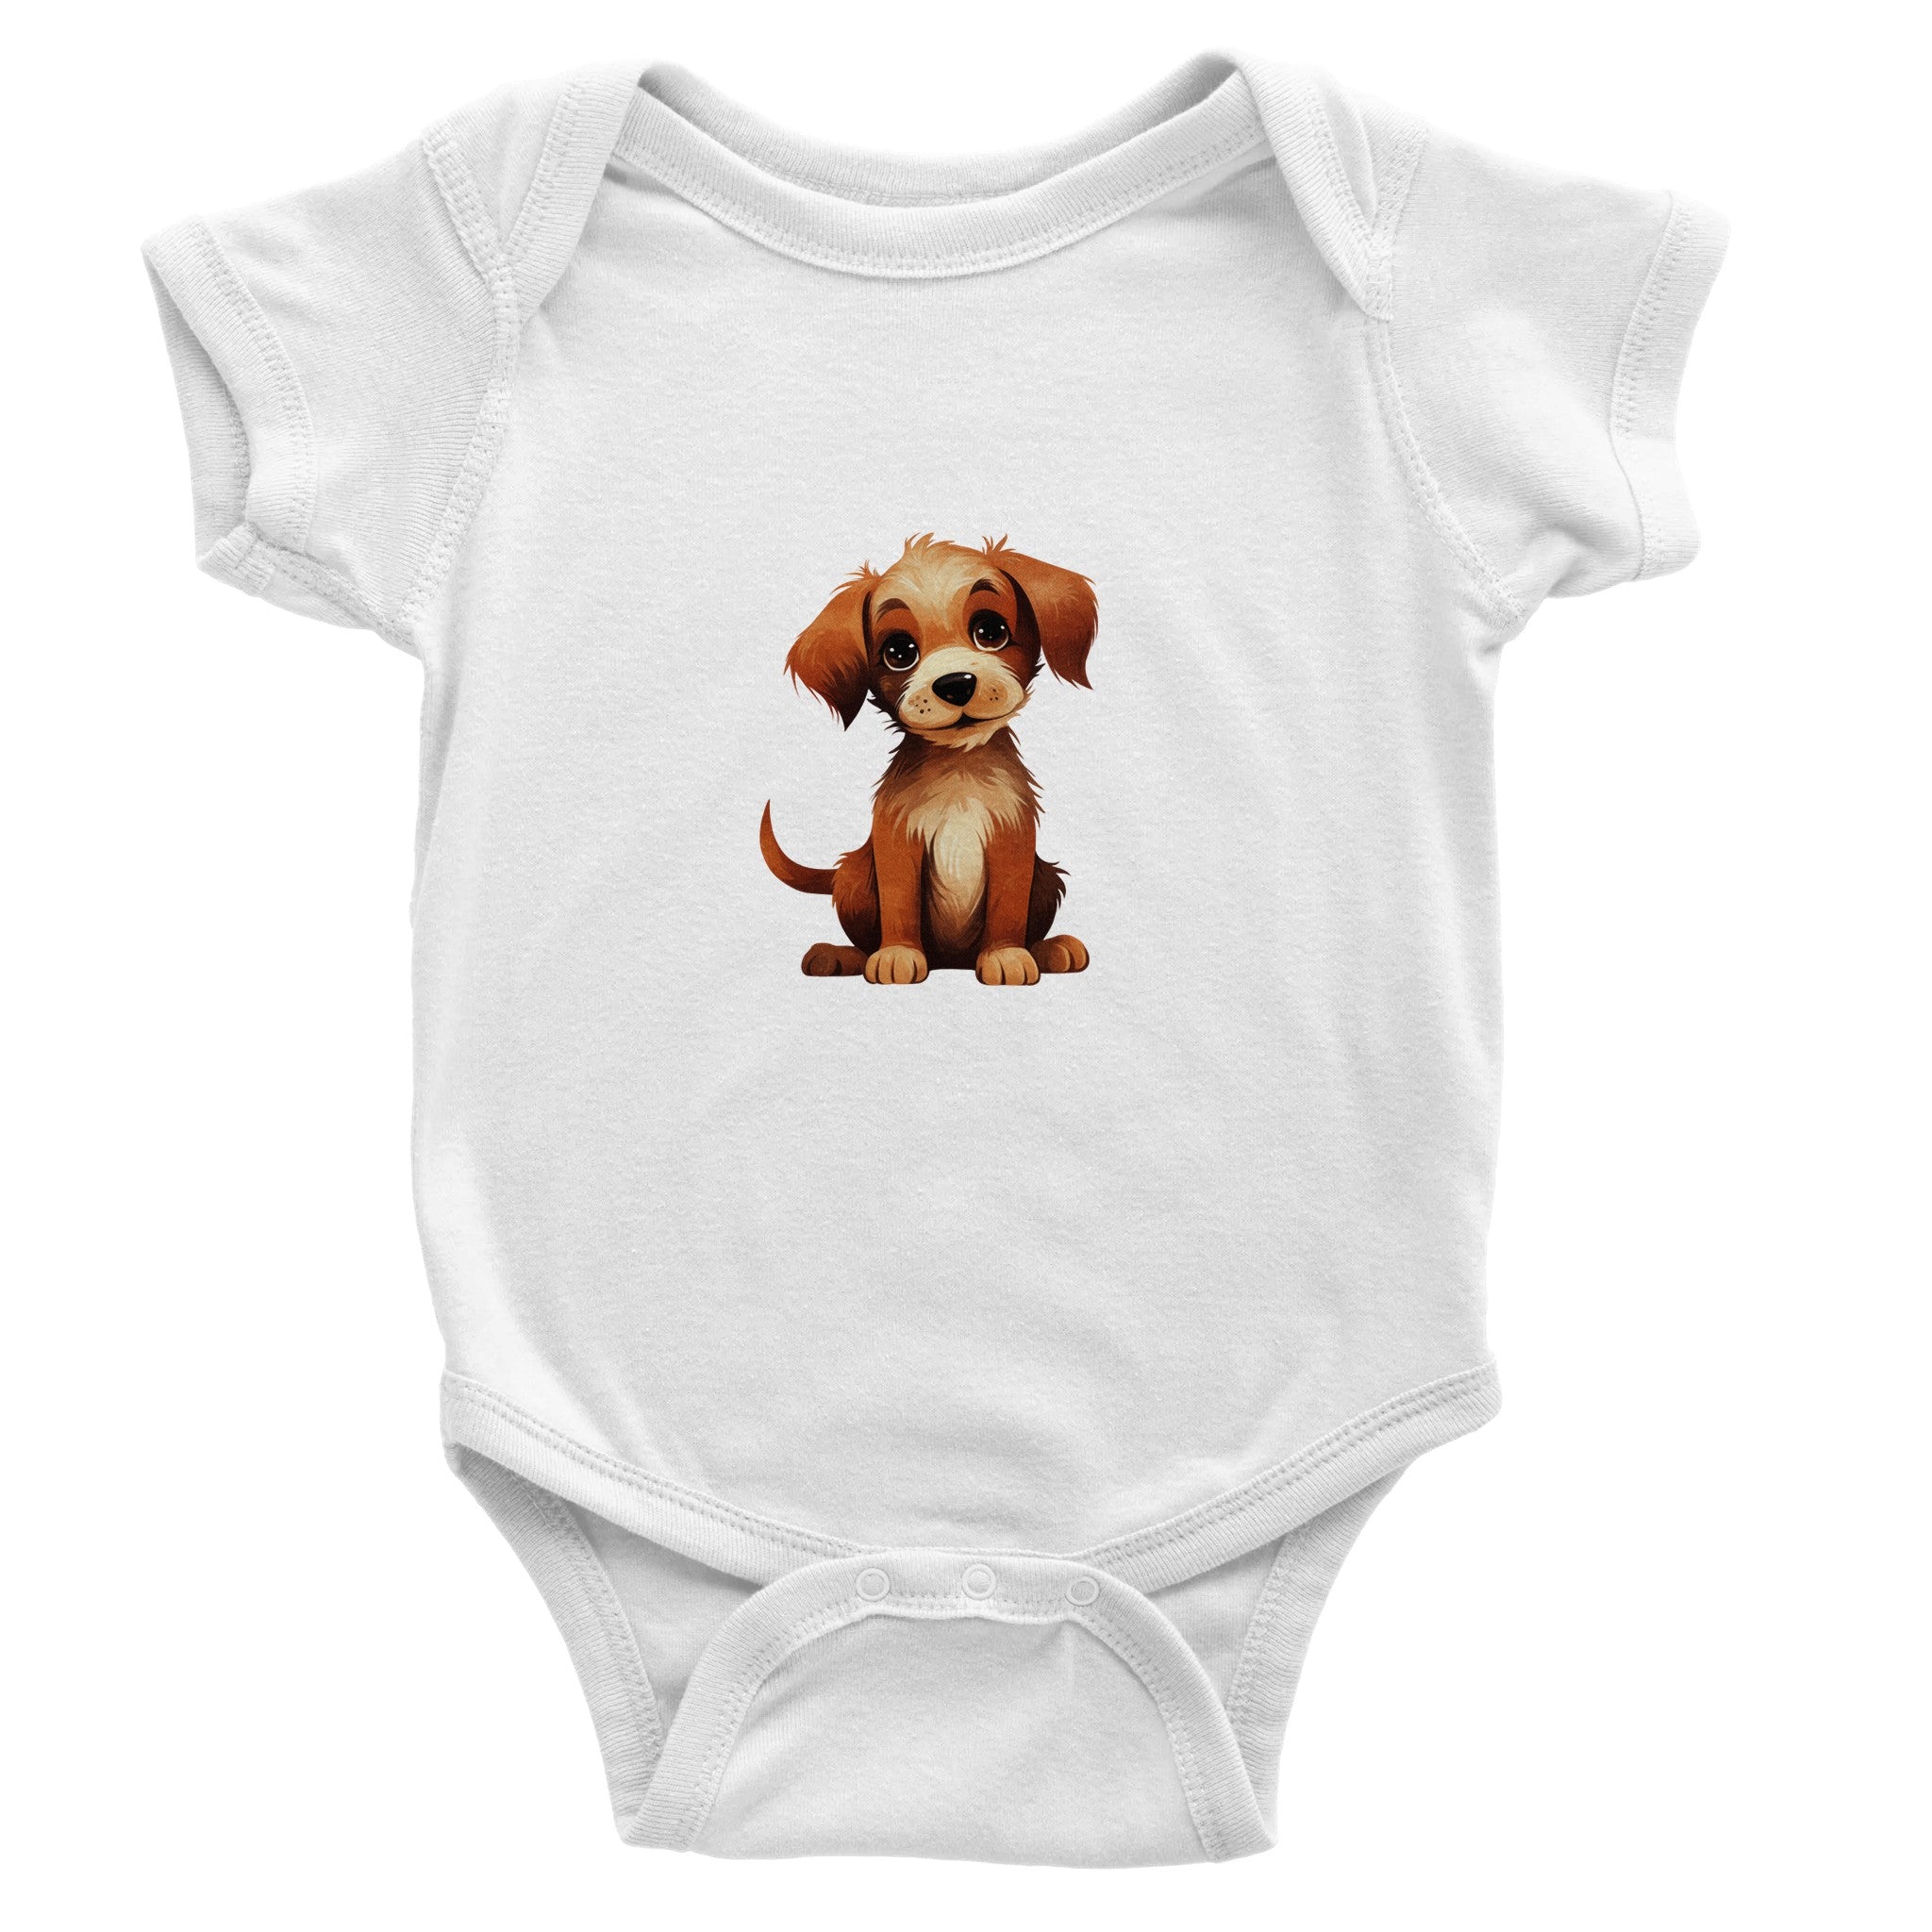 Puppy Paws Charmer Baby Short Sleeve Bodysuit - Optimalprint